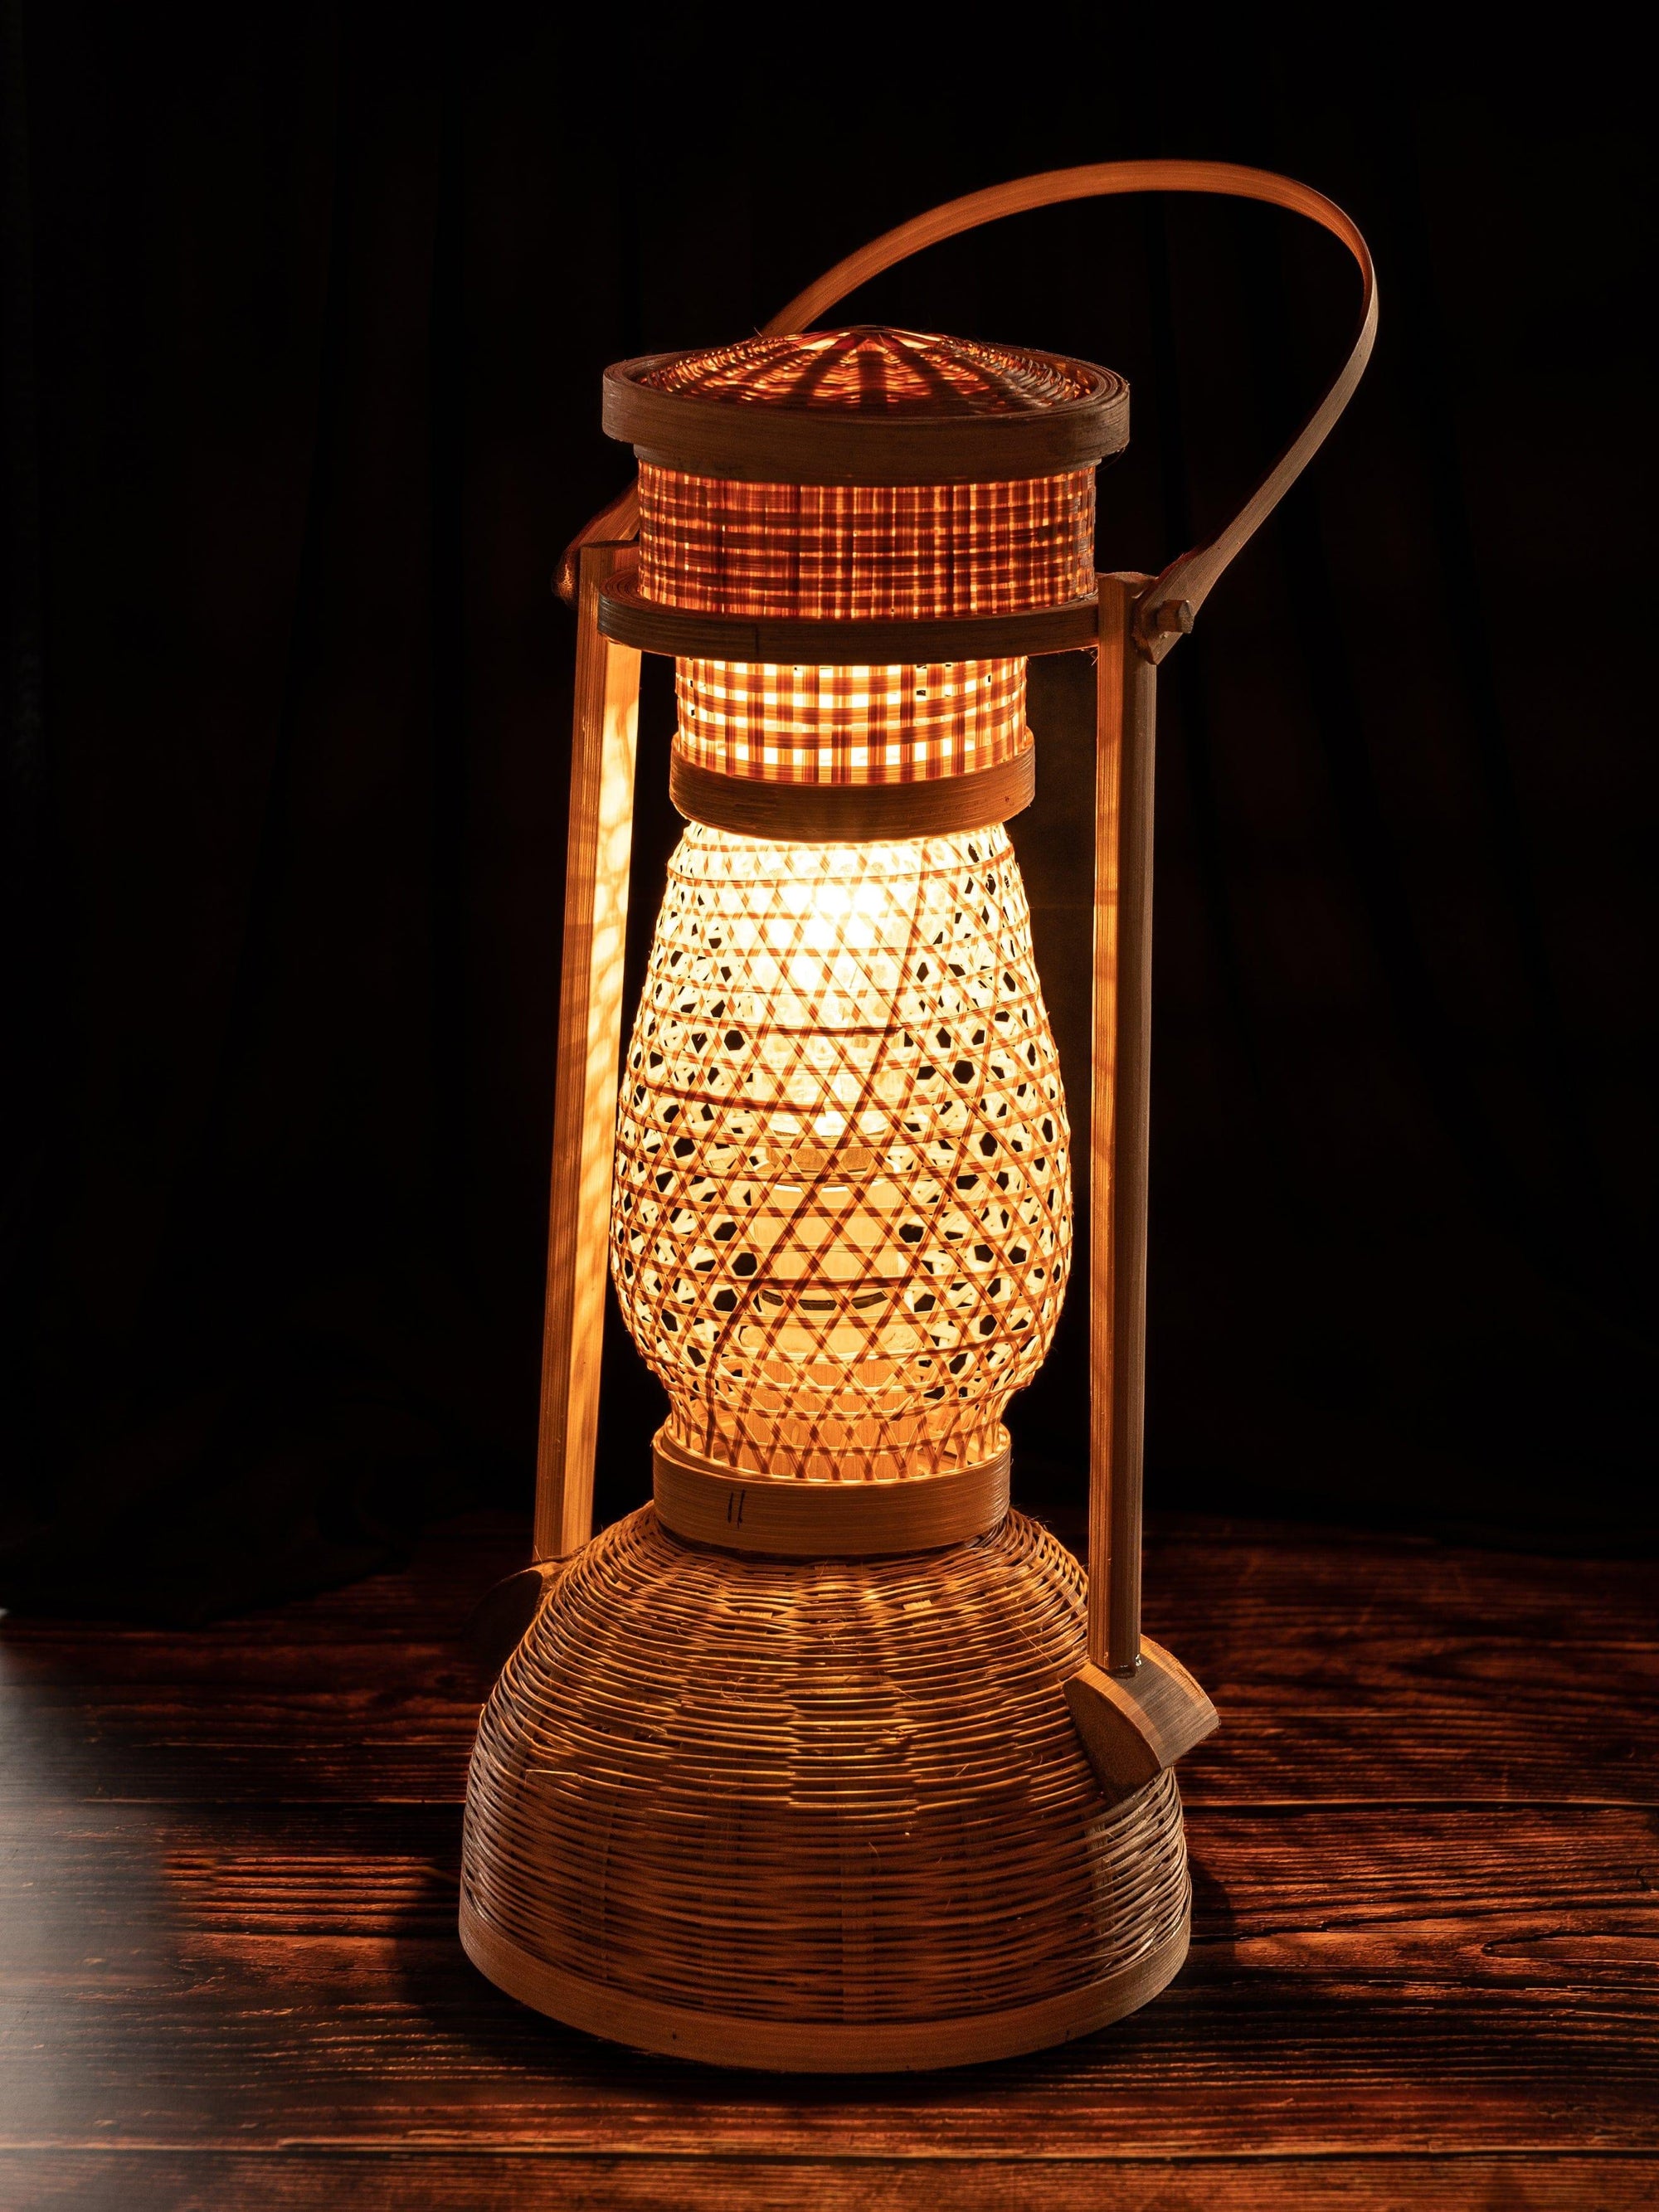 Shantiniketan Art - Bamboo Weave Lantern Decorative Showpiece - The Heritage Artifacts